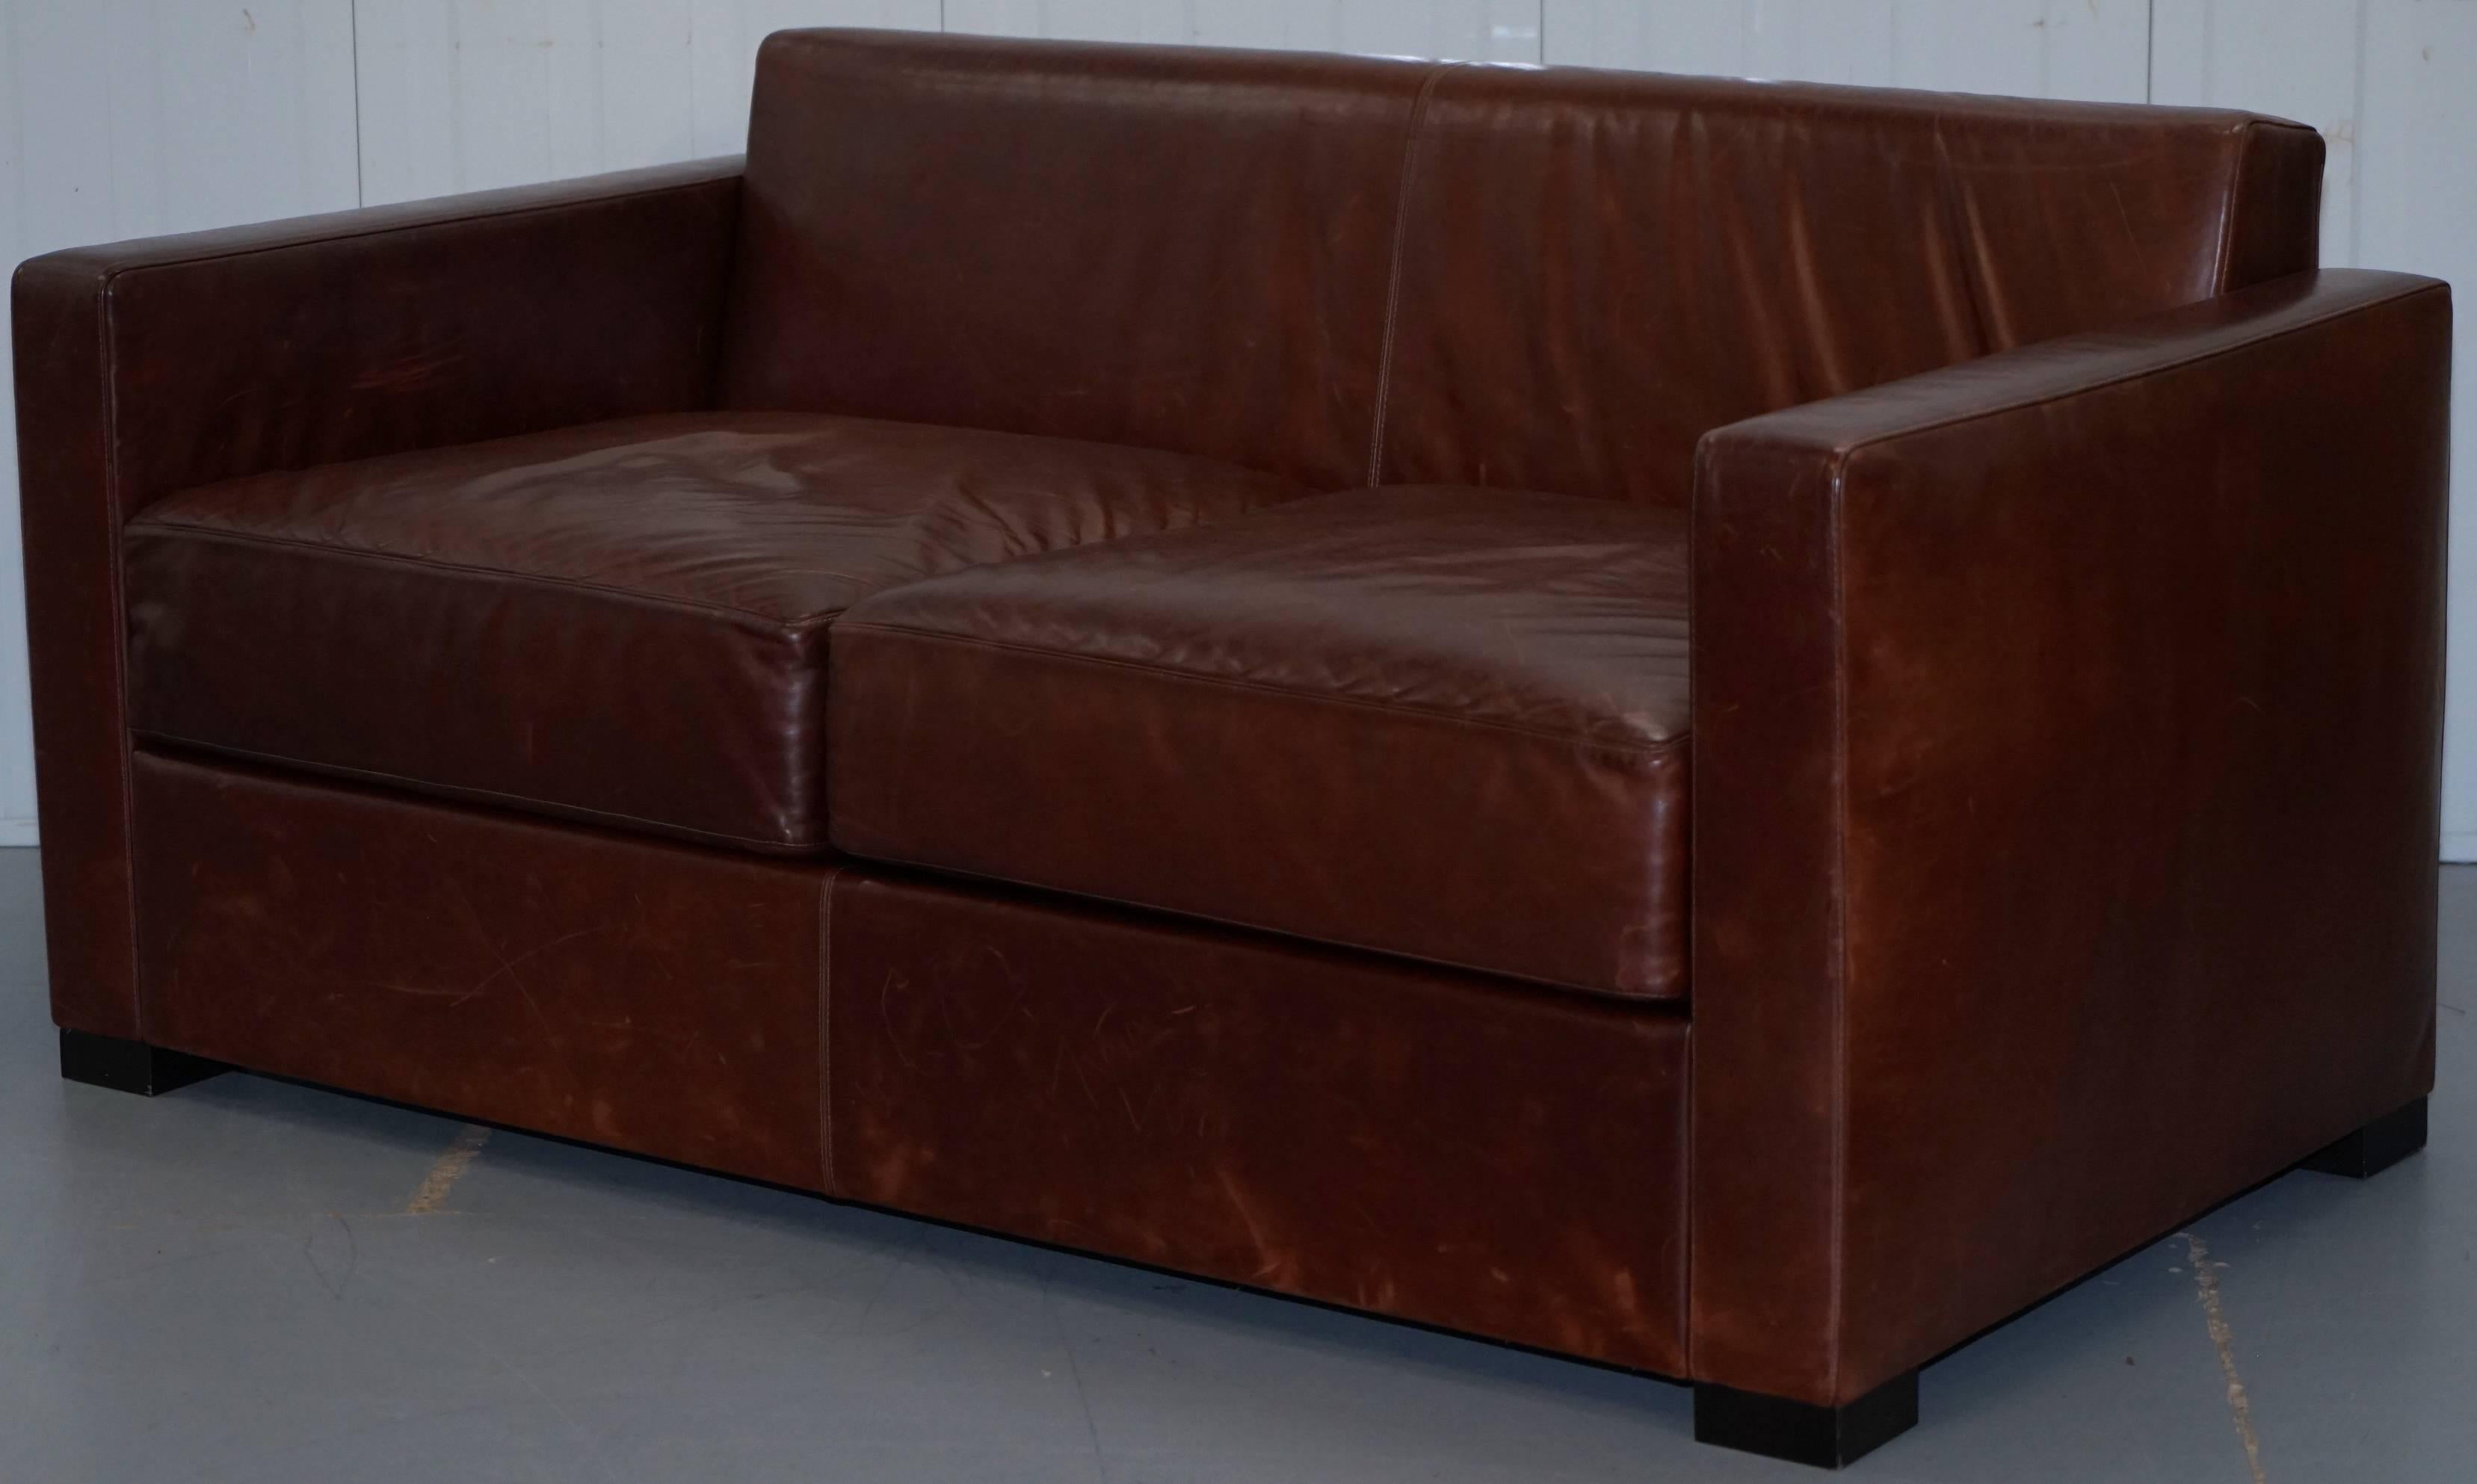 Italian Poltrona Frau Linea a Two-Seat Sofa by Peter Marino Brown Heritage Leather